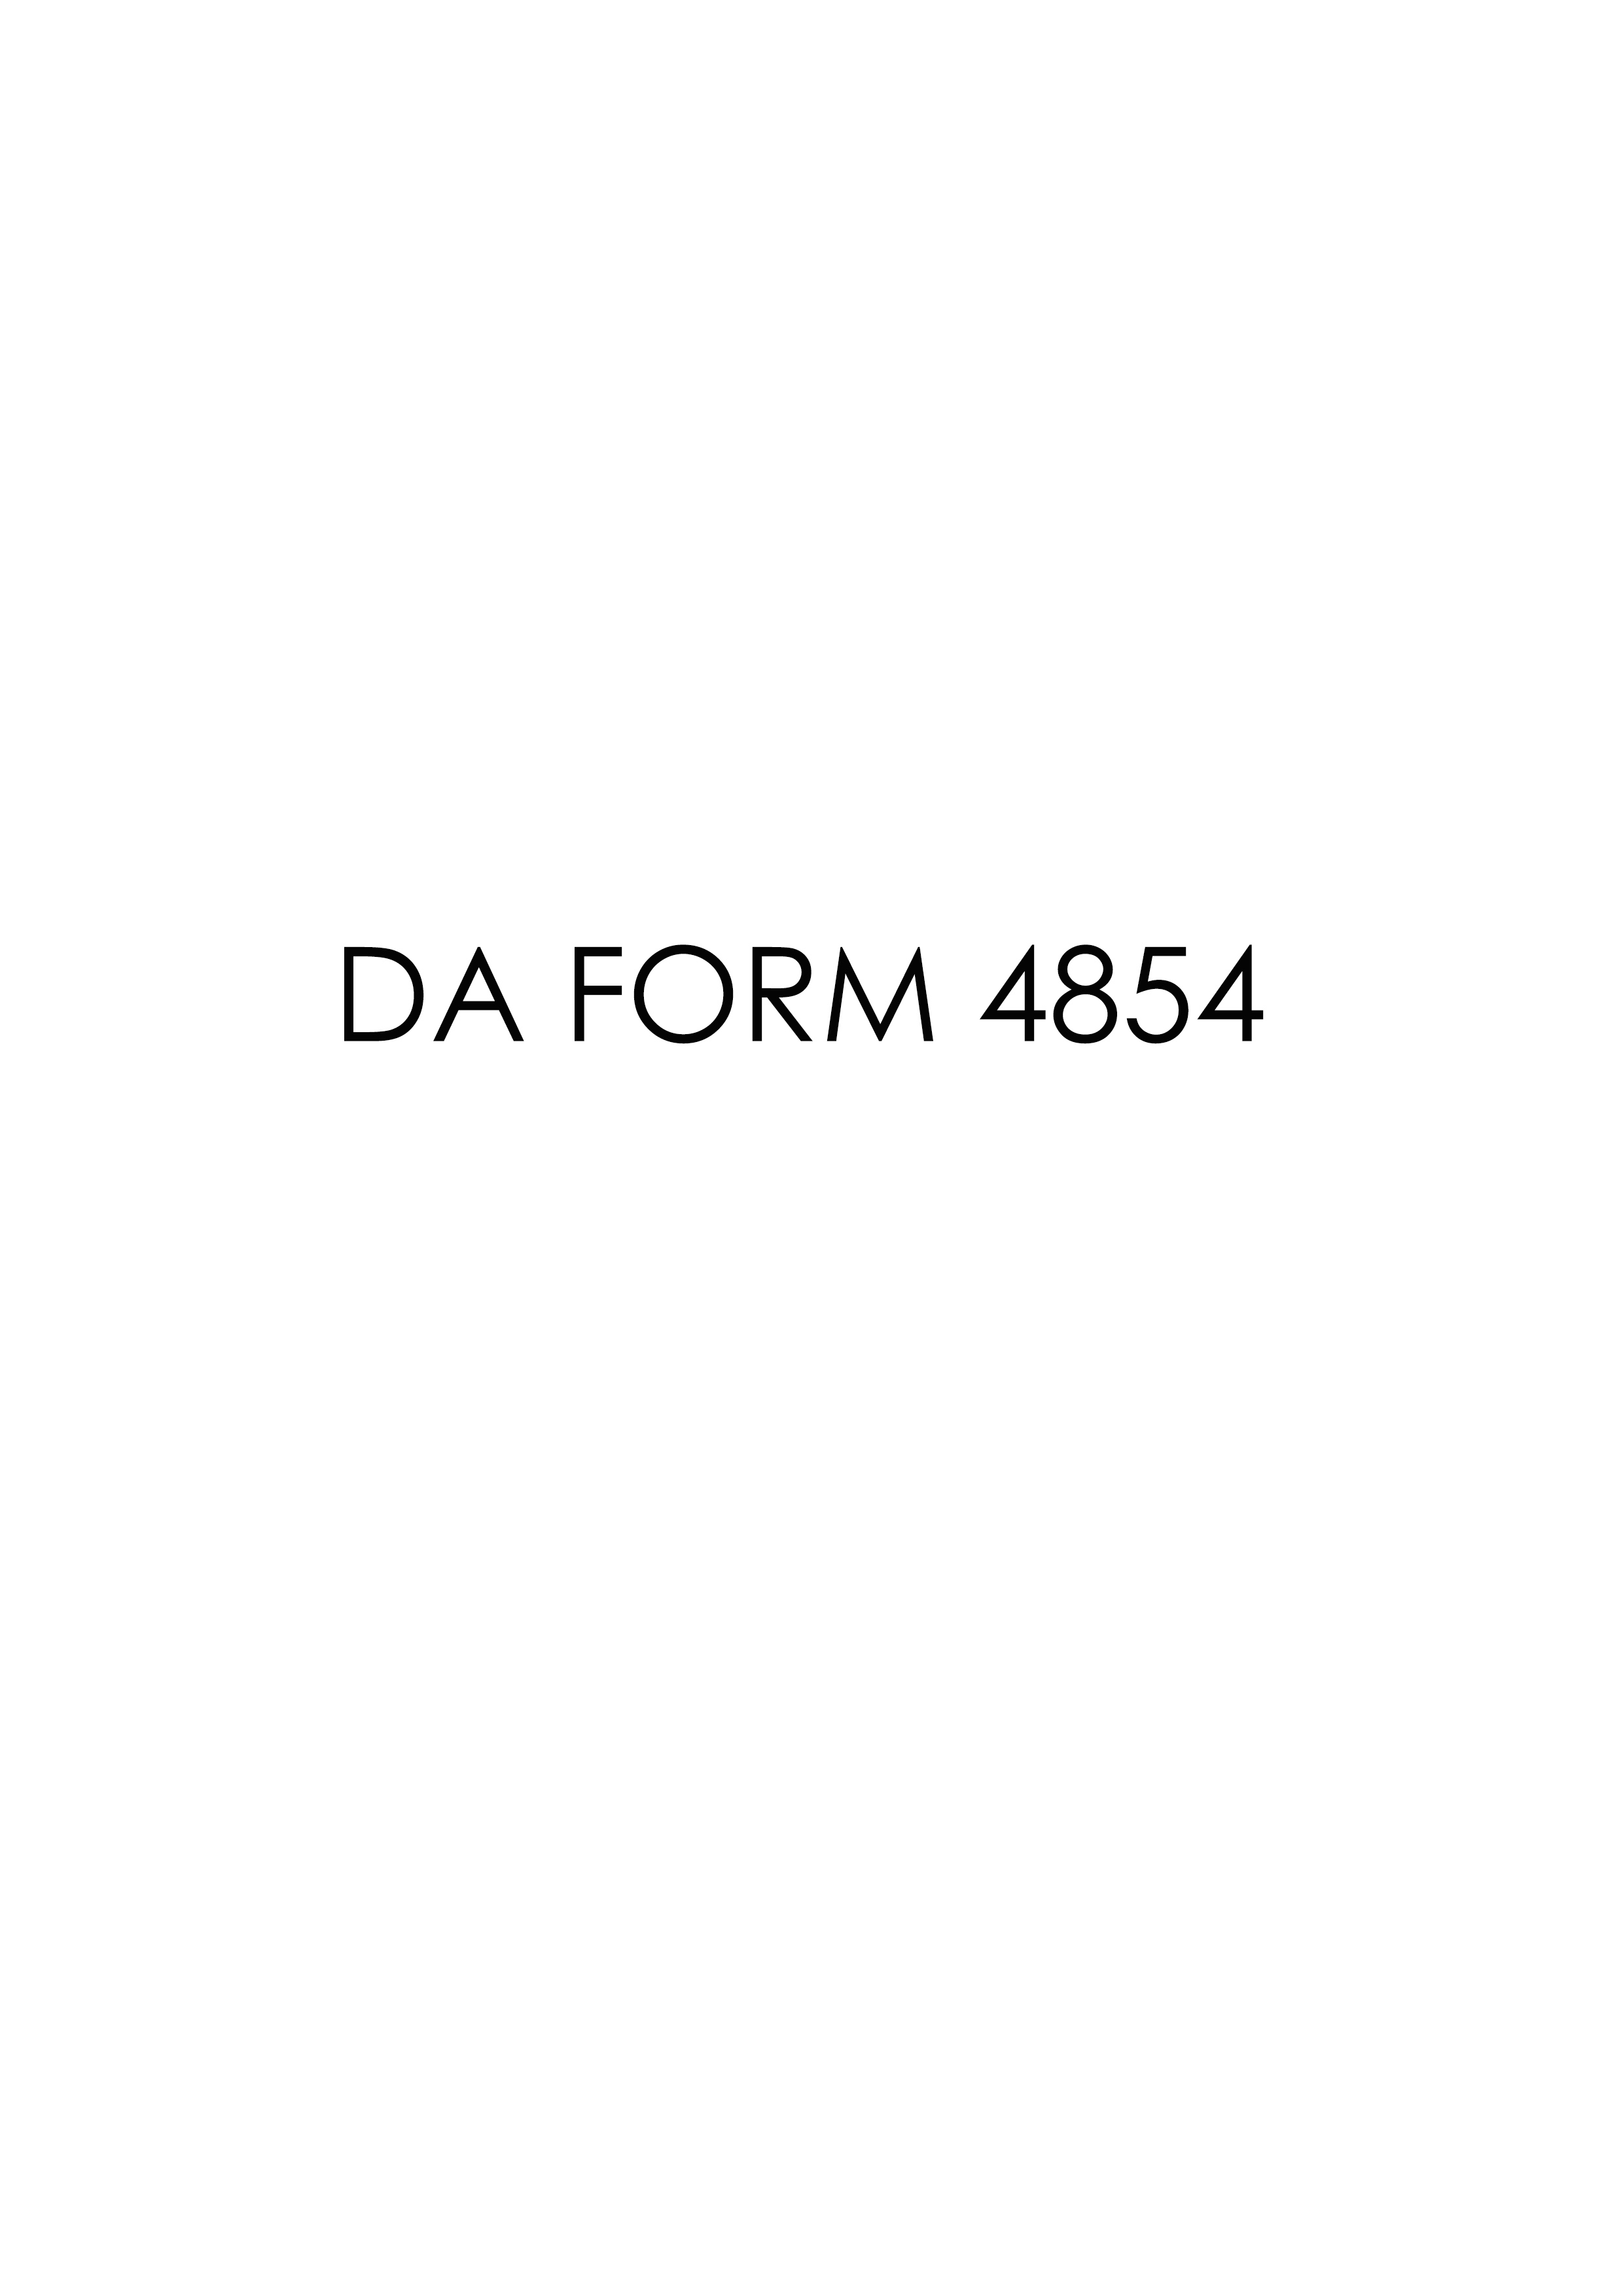 da Form 4854 fillable